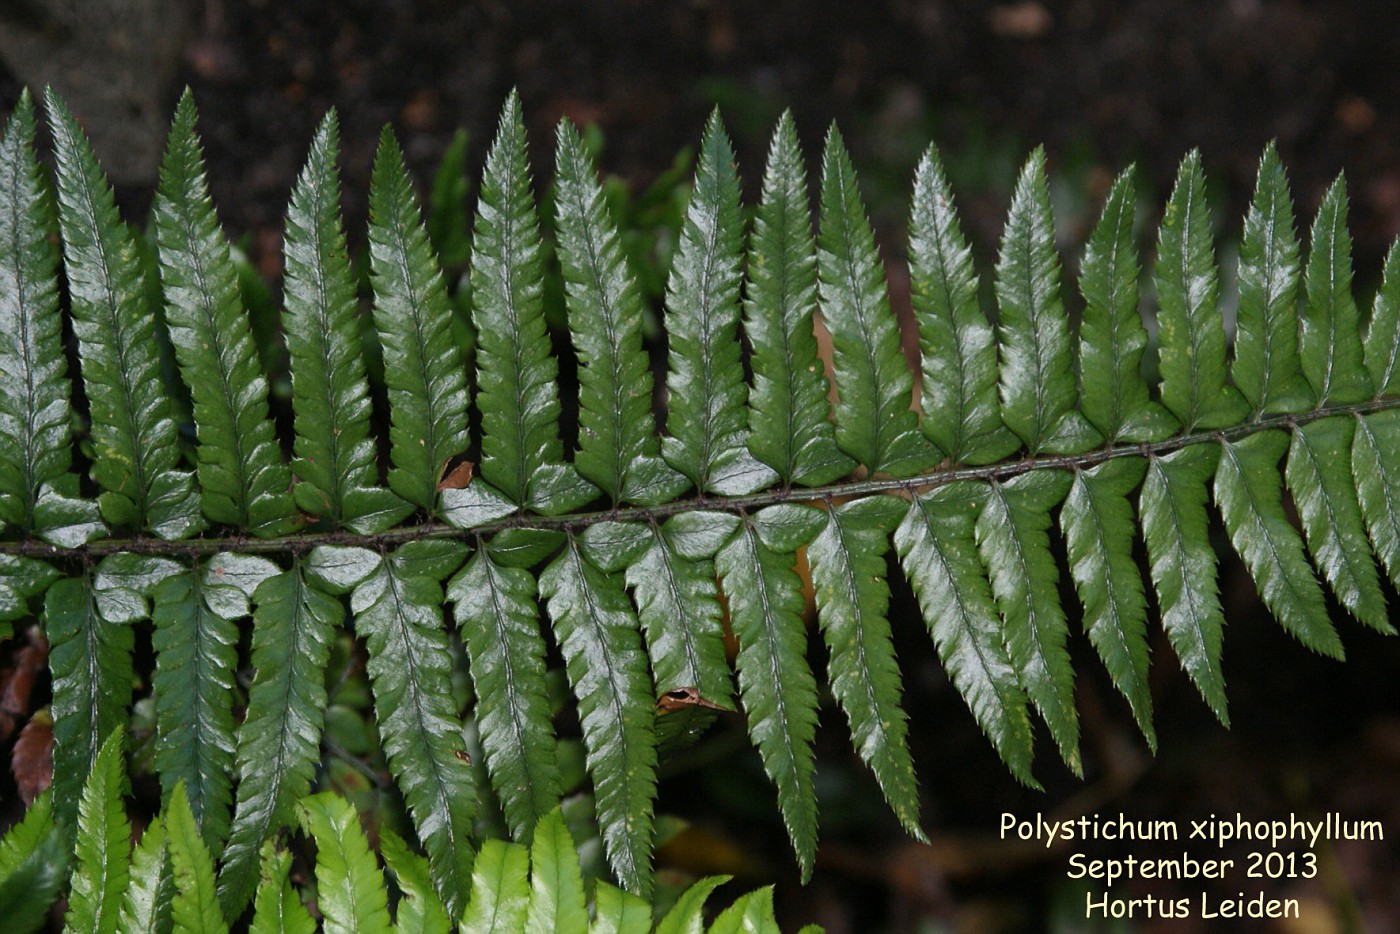 Polystichum xiphophyllum